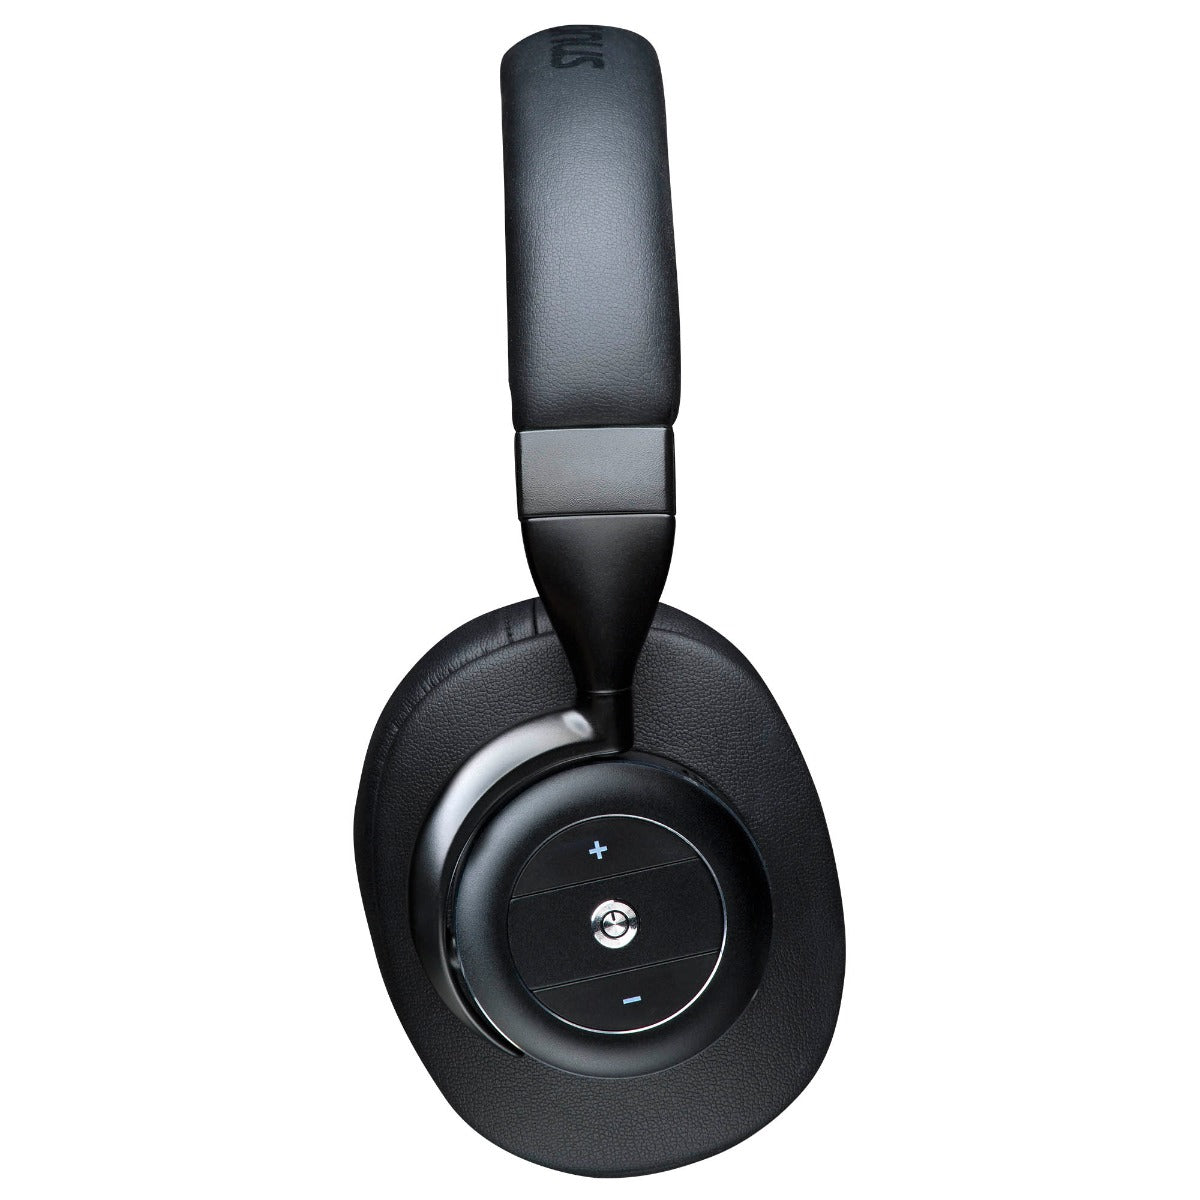 Presonus Eris HD10BT Circumaural Bluetooth Headphones with Active Noise Canceling